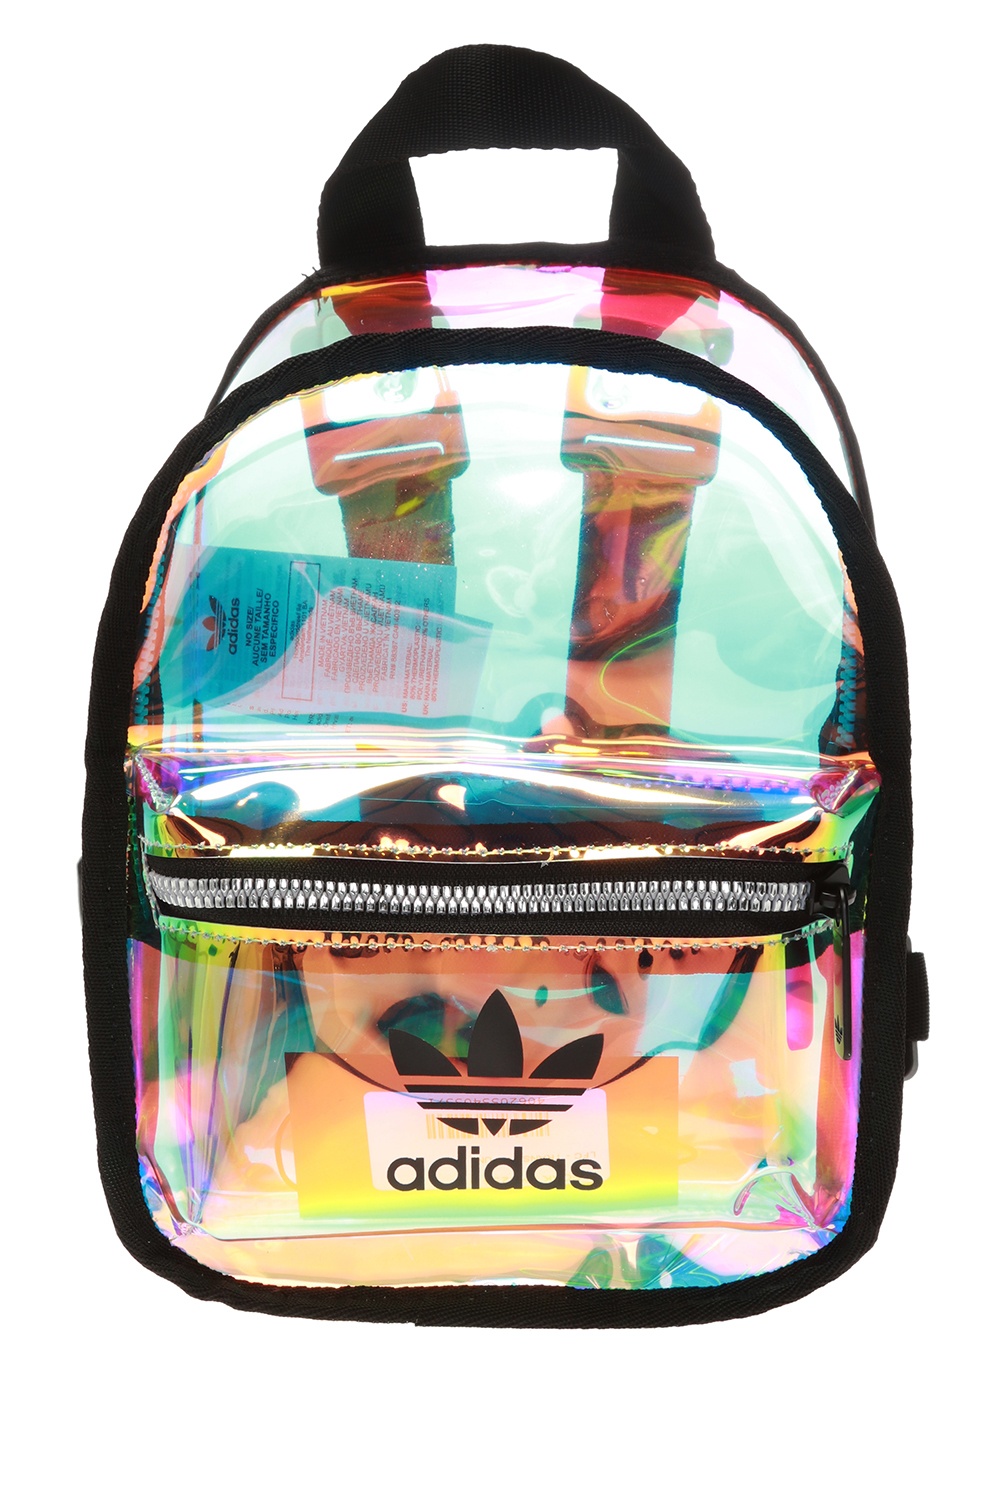 adidas backpack japan